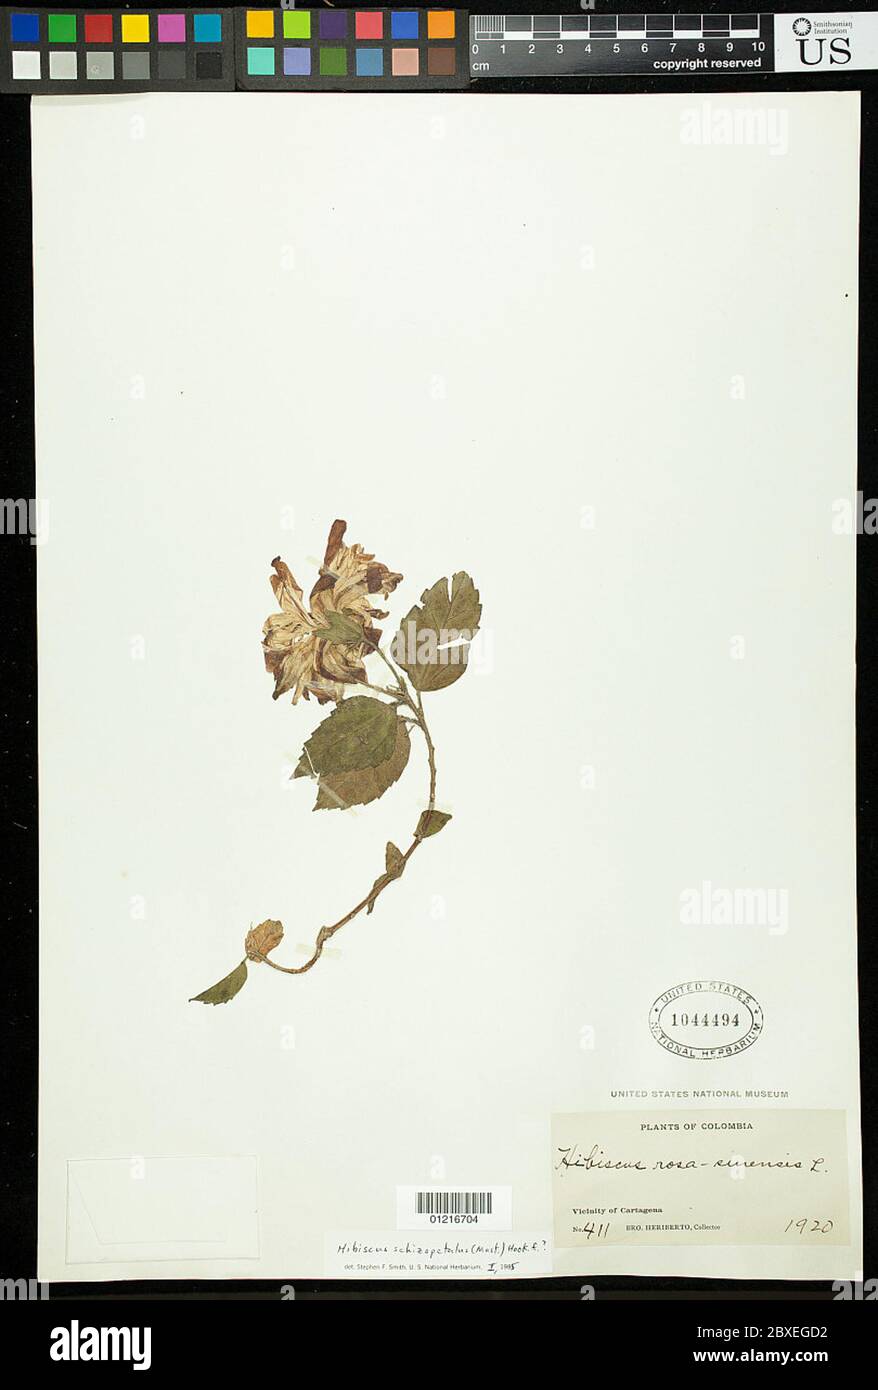 Hibiscus rosasinensis var schizopetalus Dyer Hibiscus rosasinensis var schizopetalus Dyer. Stock Photo